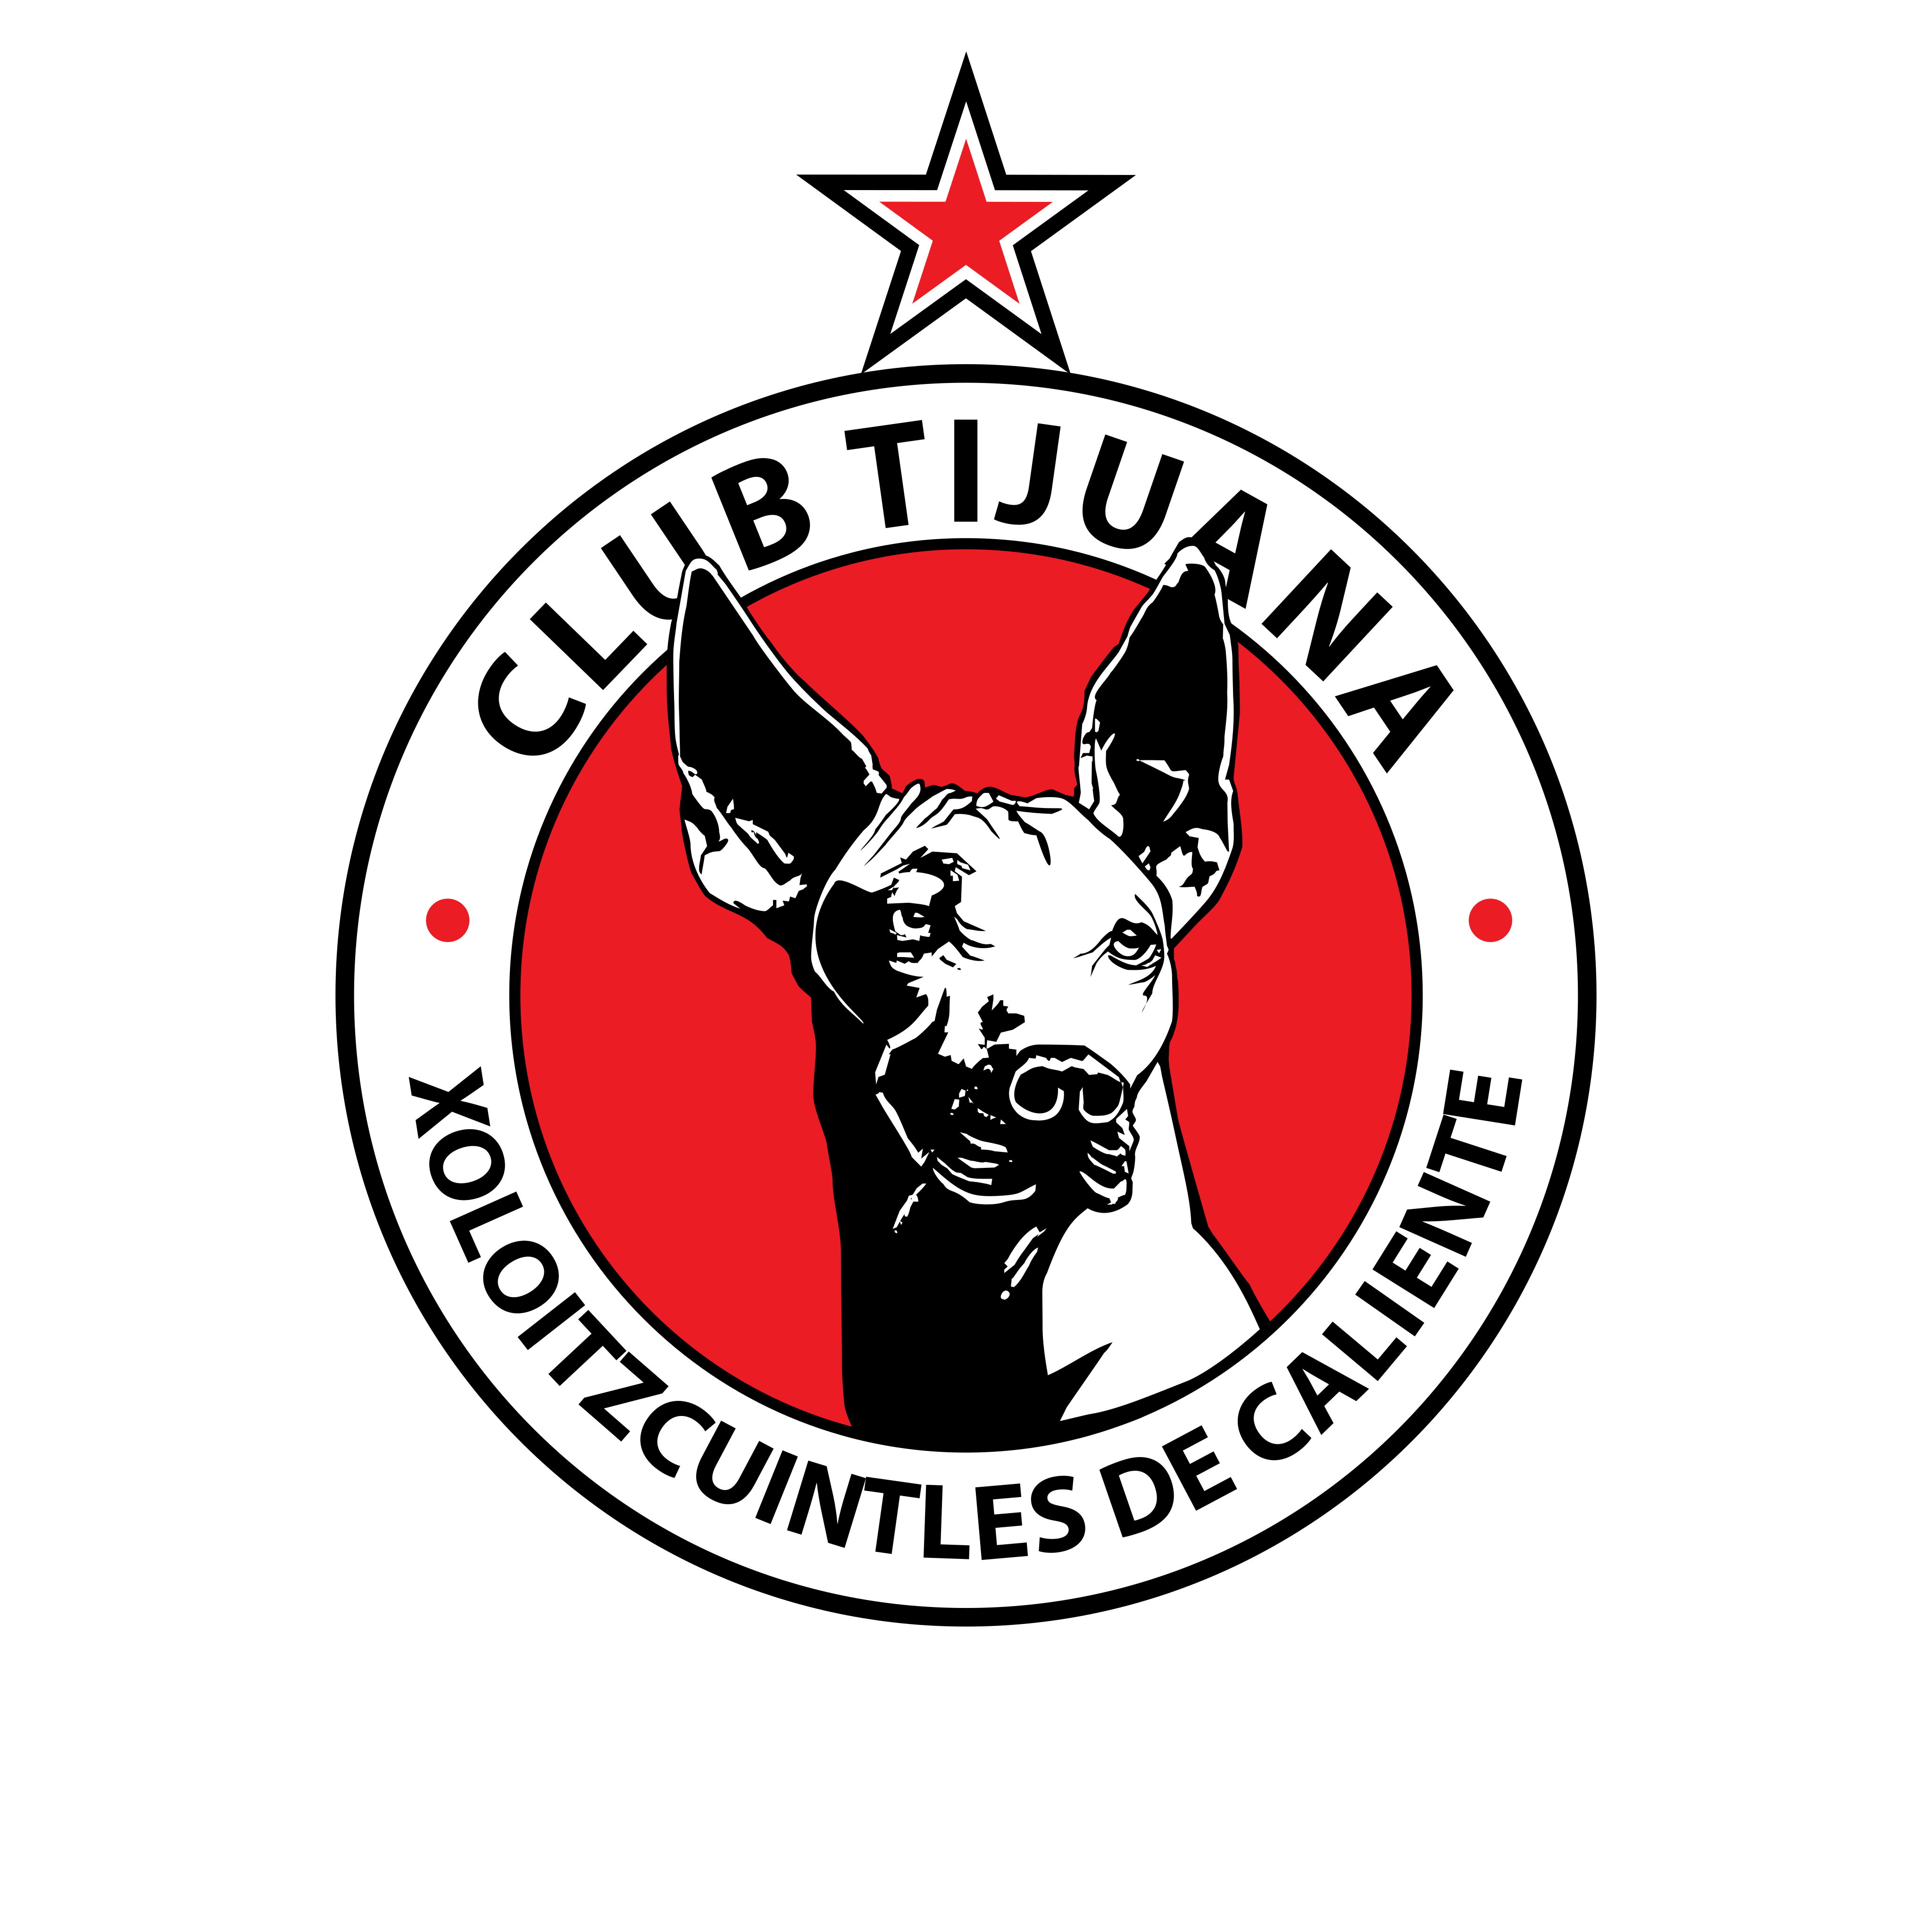 Club Tijuana Logo PNG.